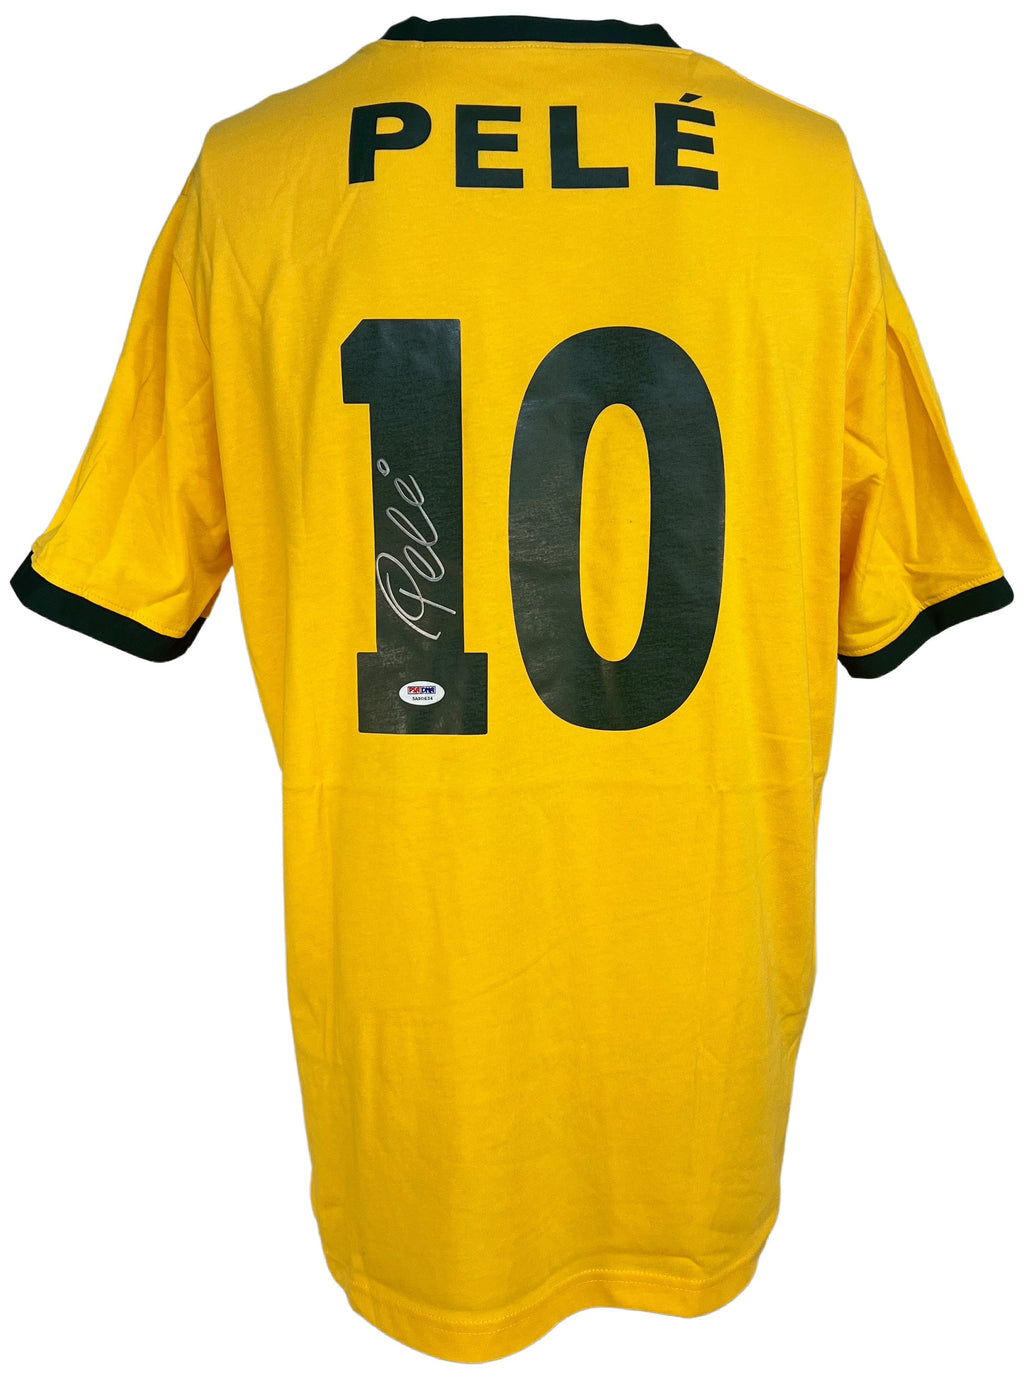 Pele autographed signed jersey World Cup Brazilian national team PSA COA